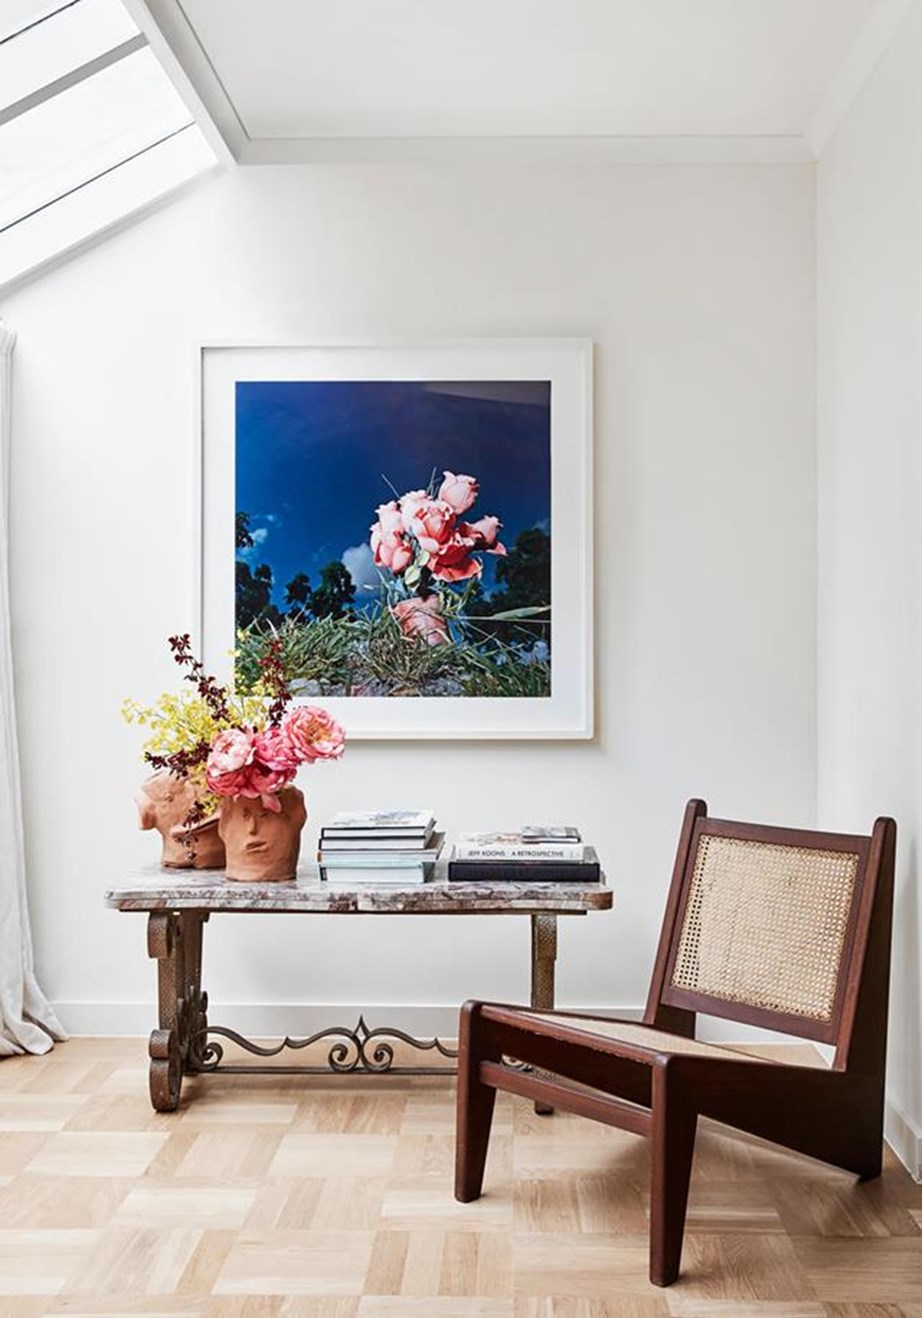 A vivid Tom Ramsay artwork enlivens this elegant corner space.